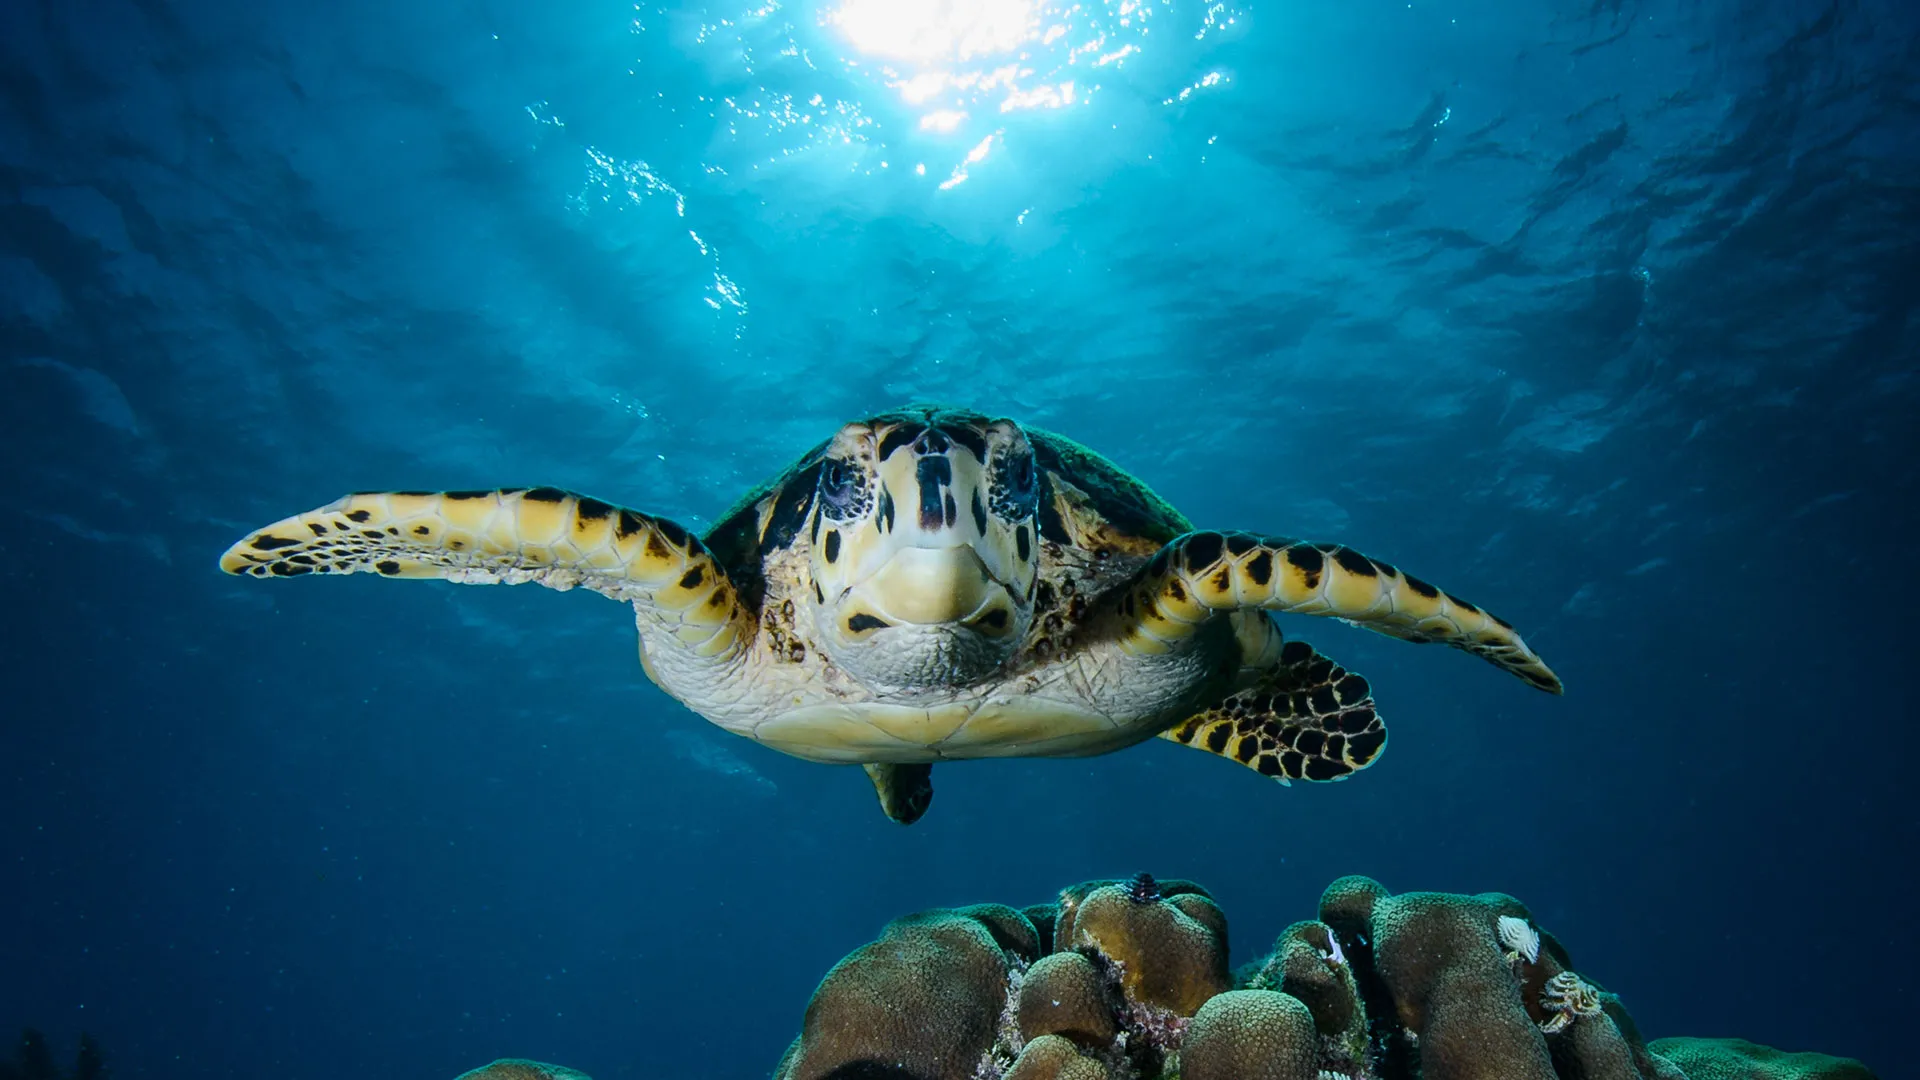 Turtle in the ocean - Ron Watkins Photographer > La Fondation Dassault Systèmes